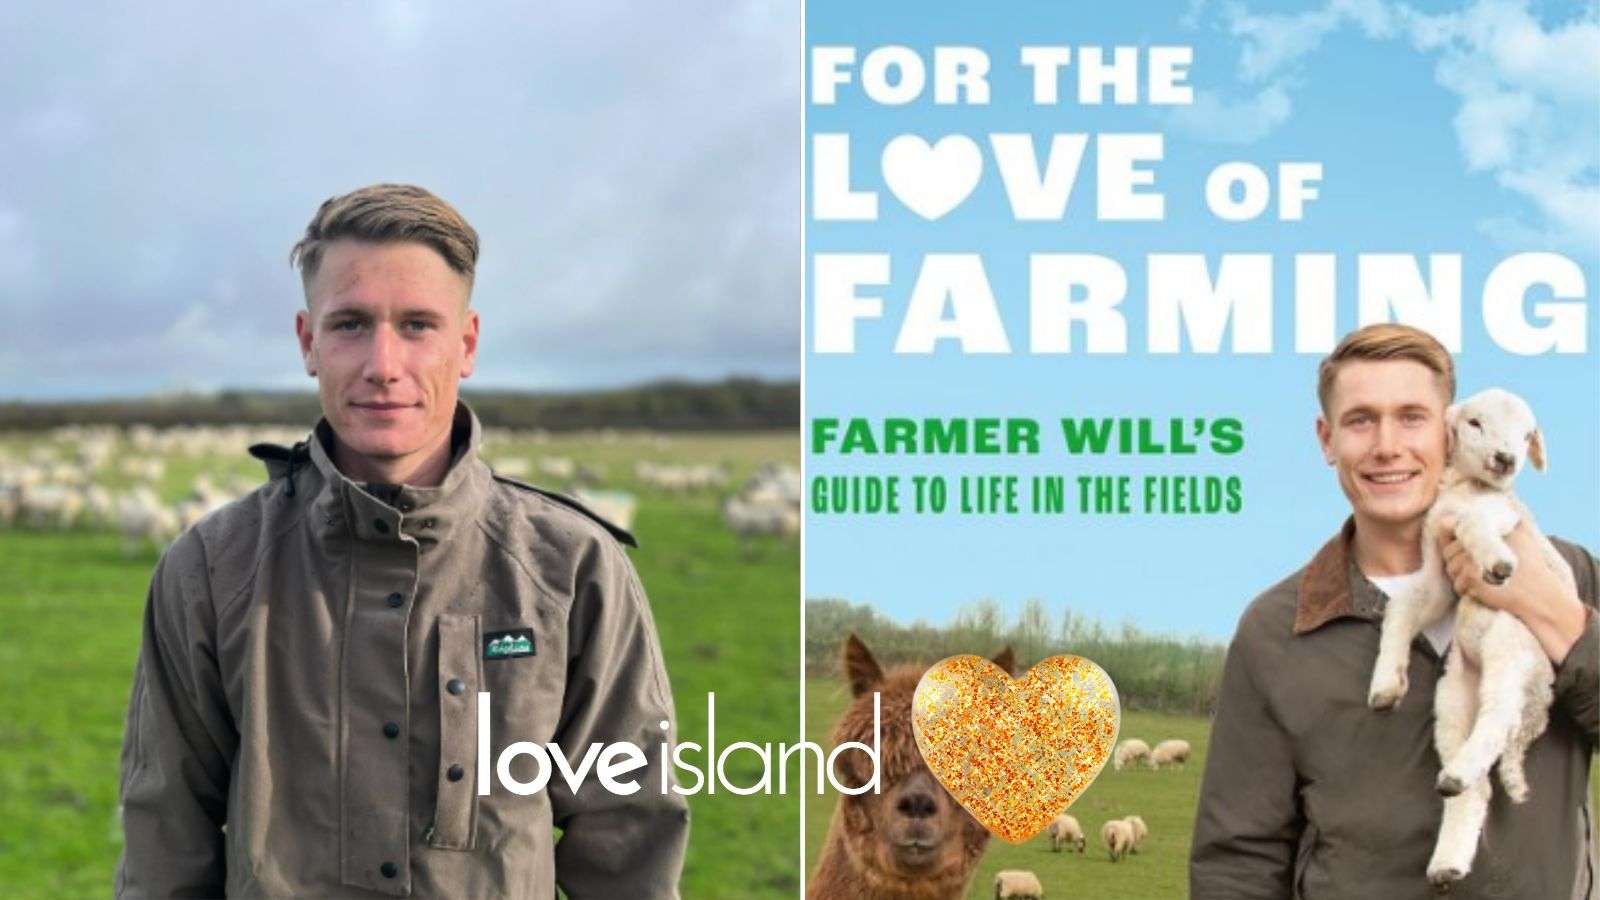 Farmer Will from Love Island